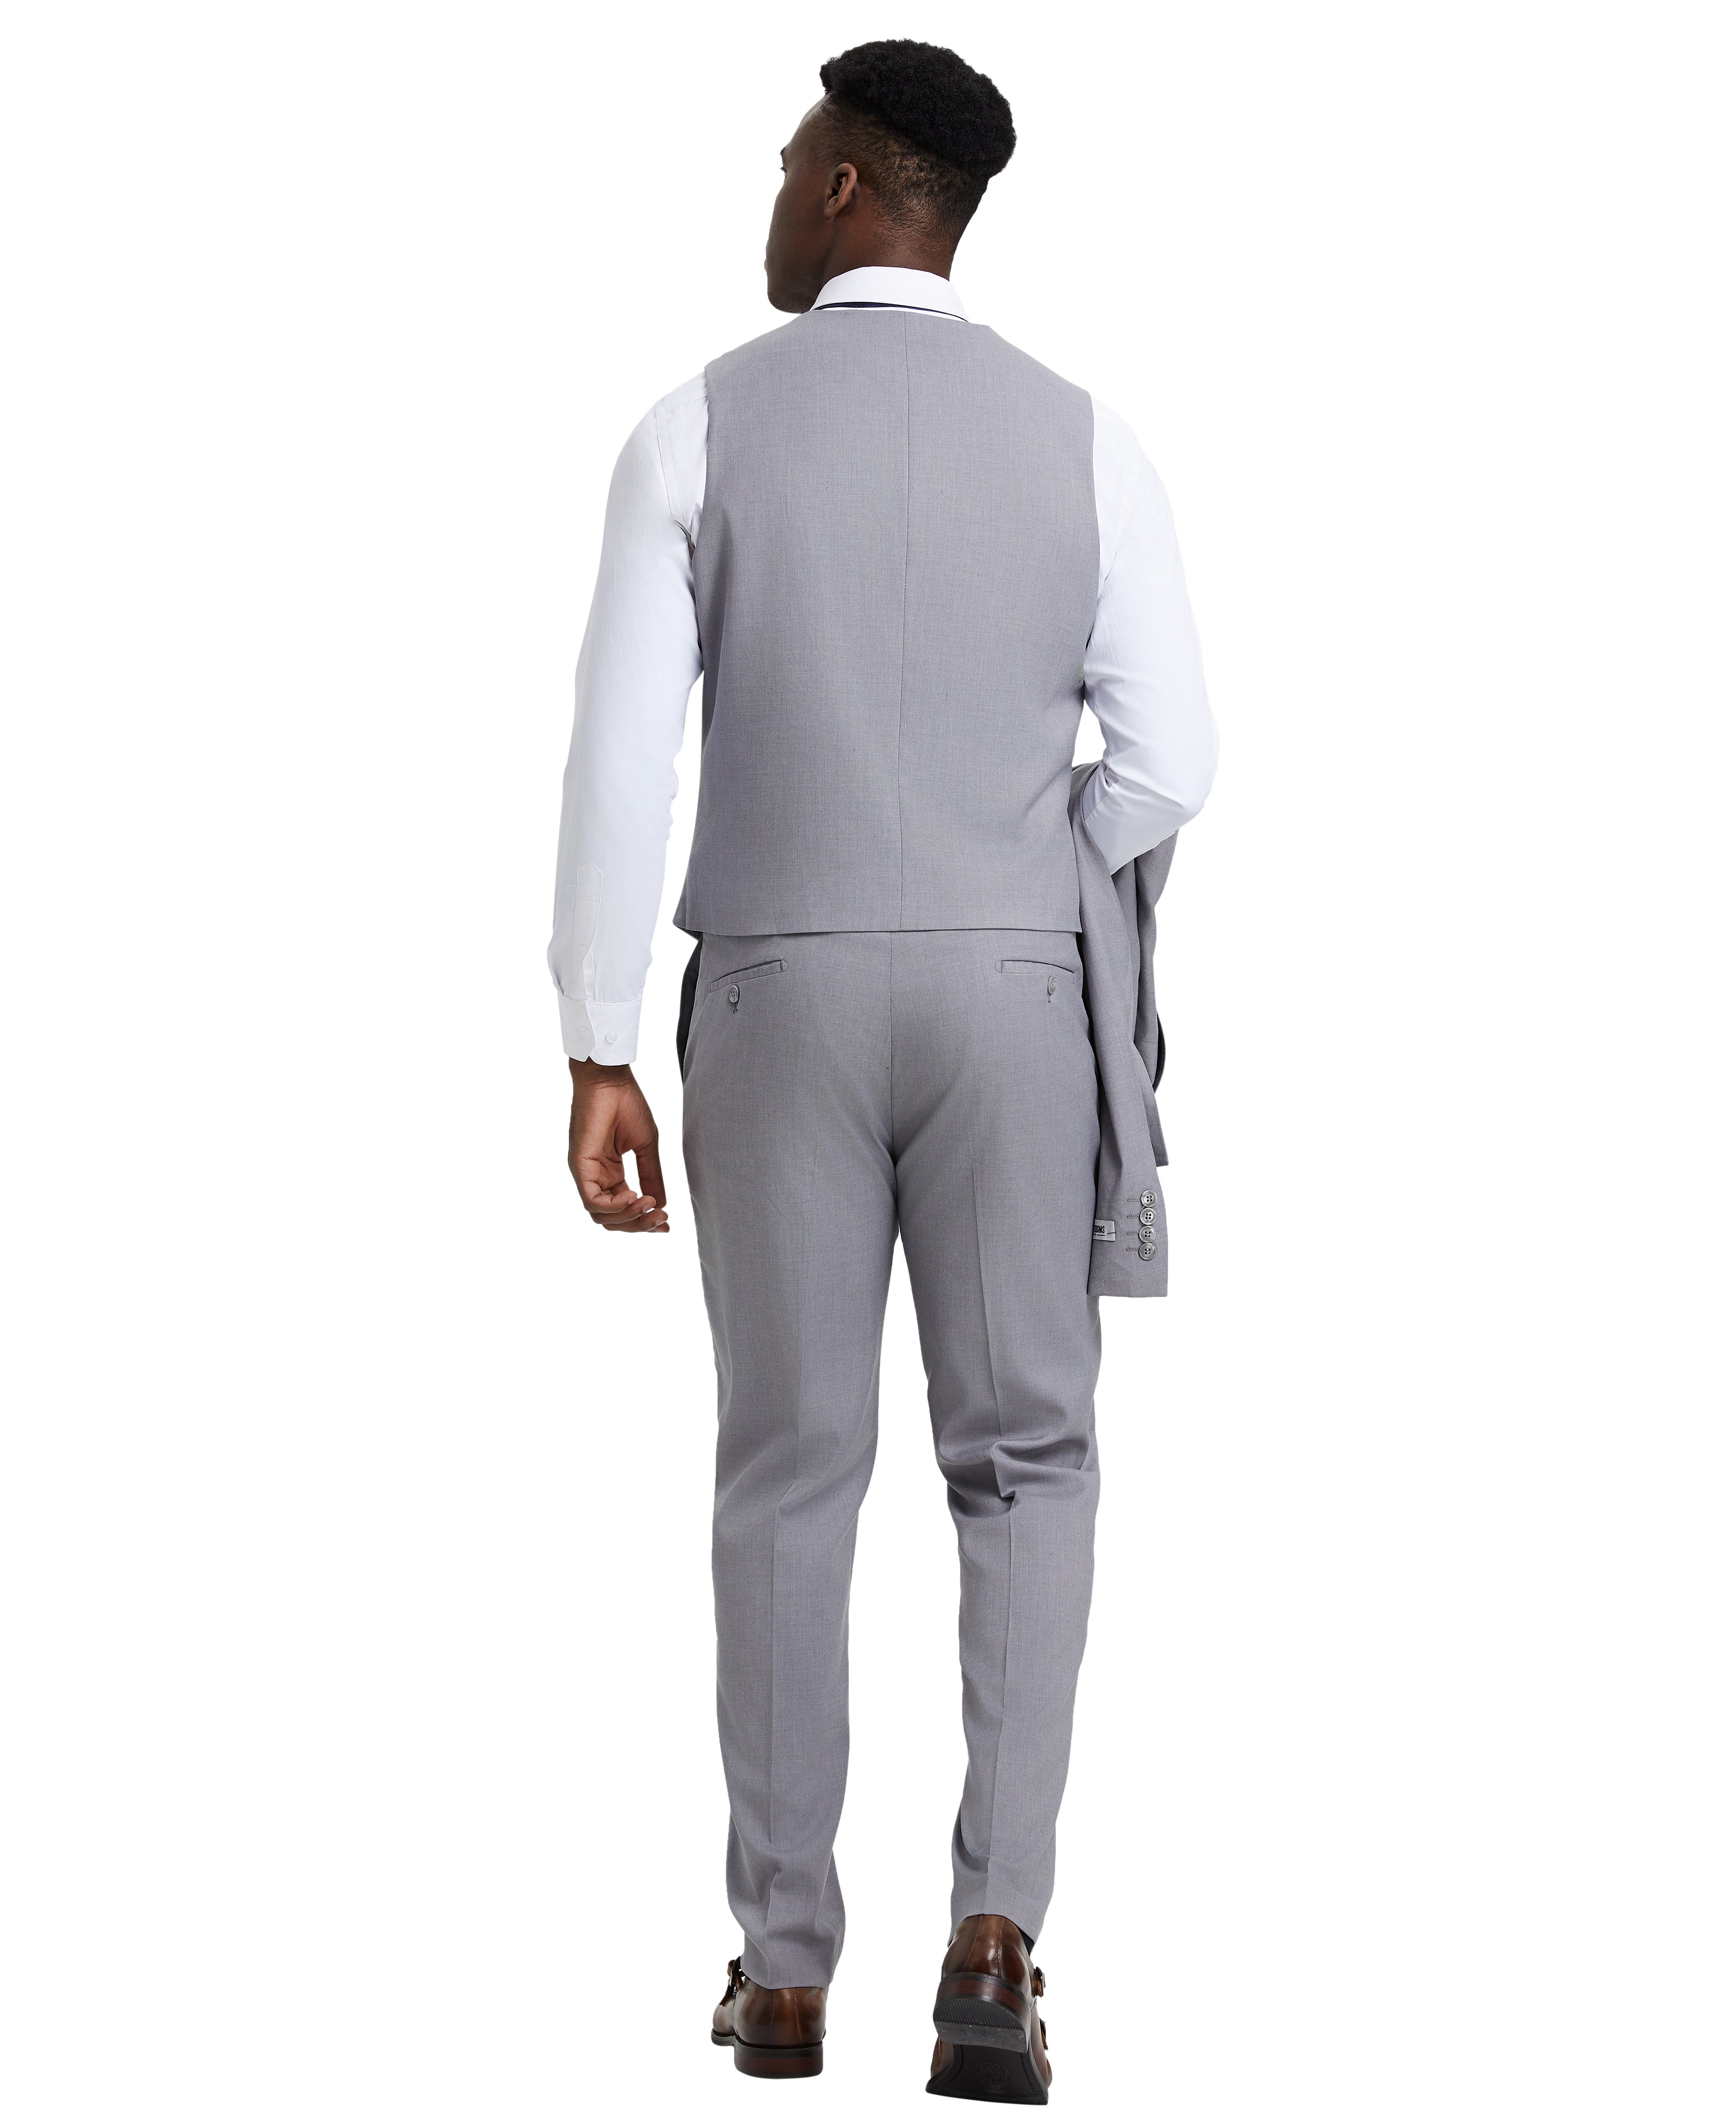 Stacy Adams Hybrid Fit U-Shaped Vested Suit, Grey